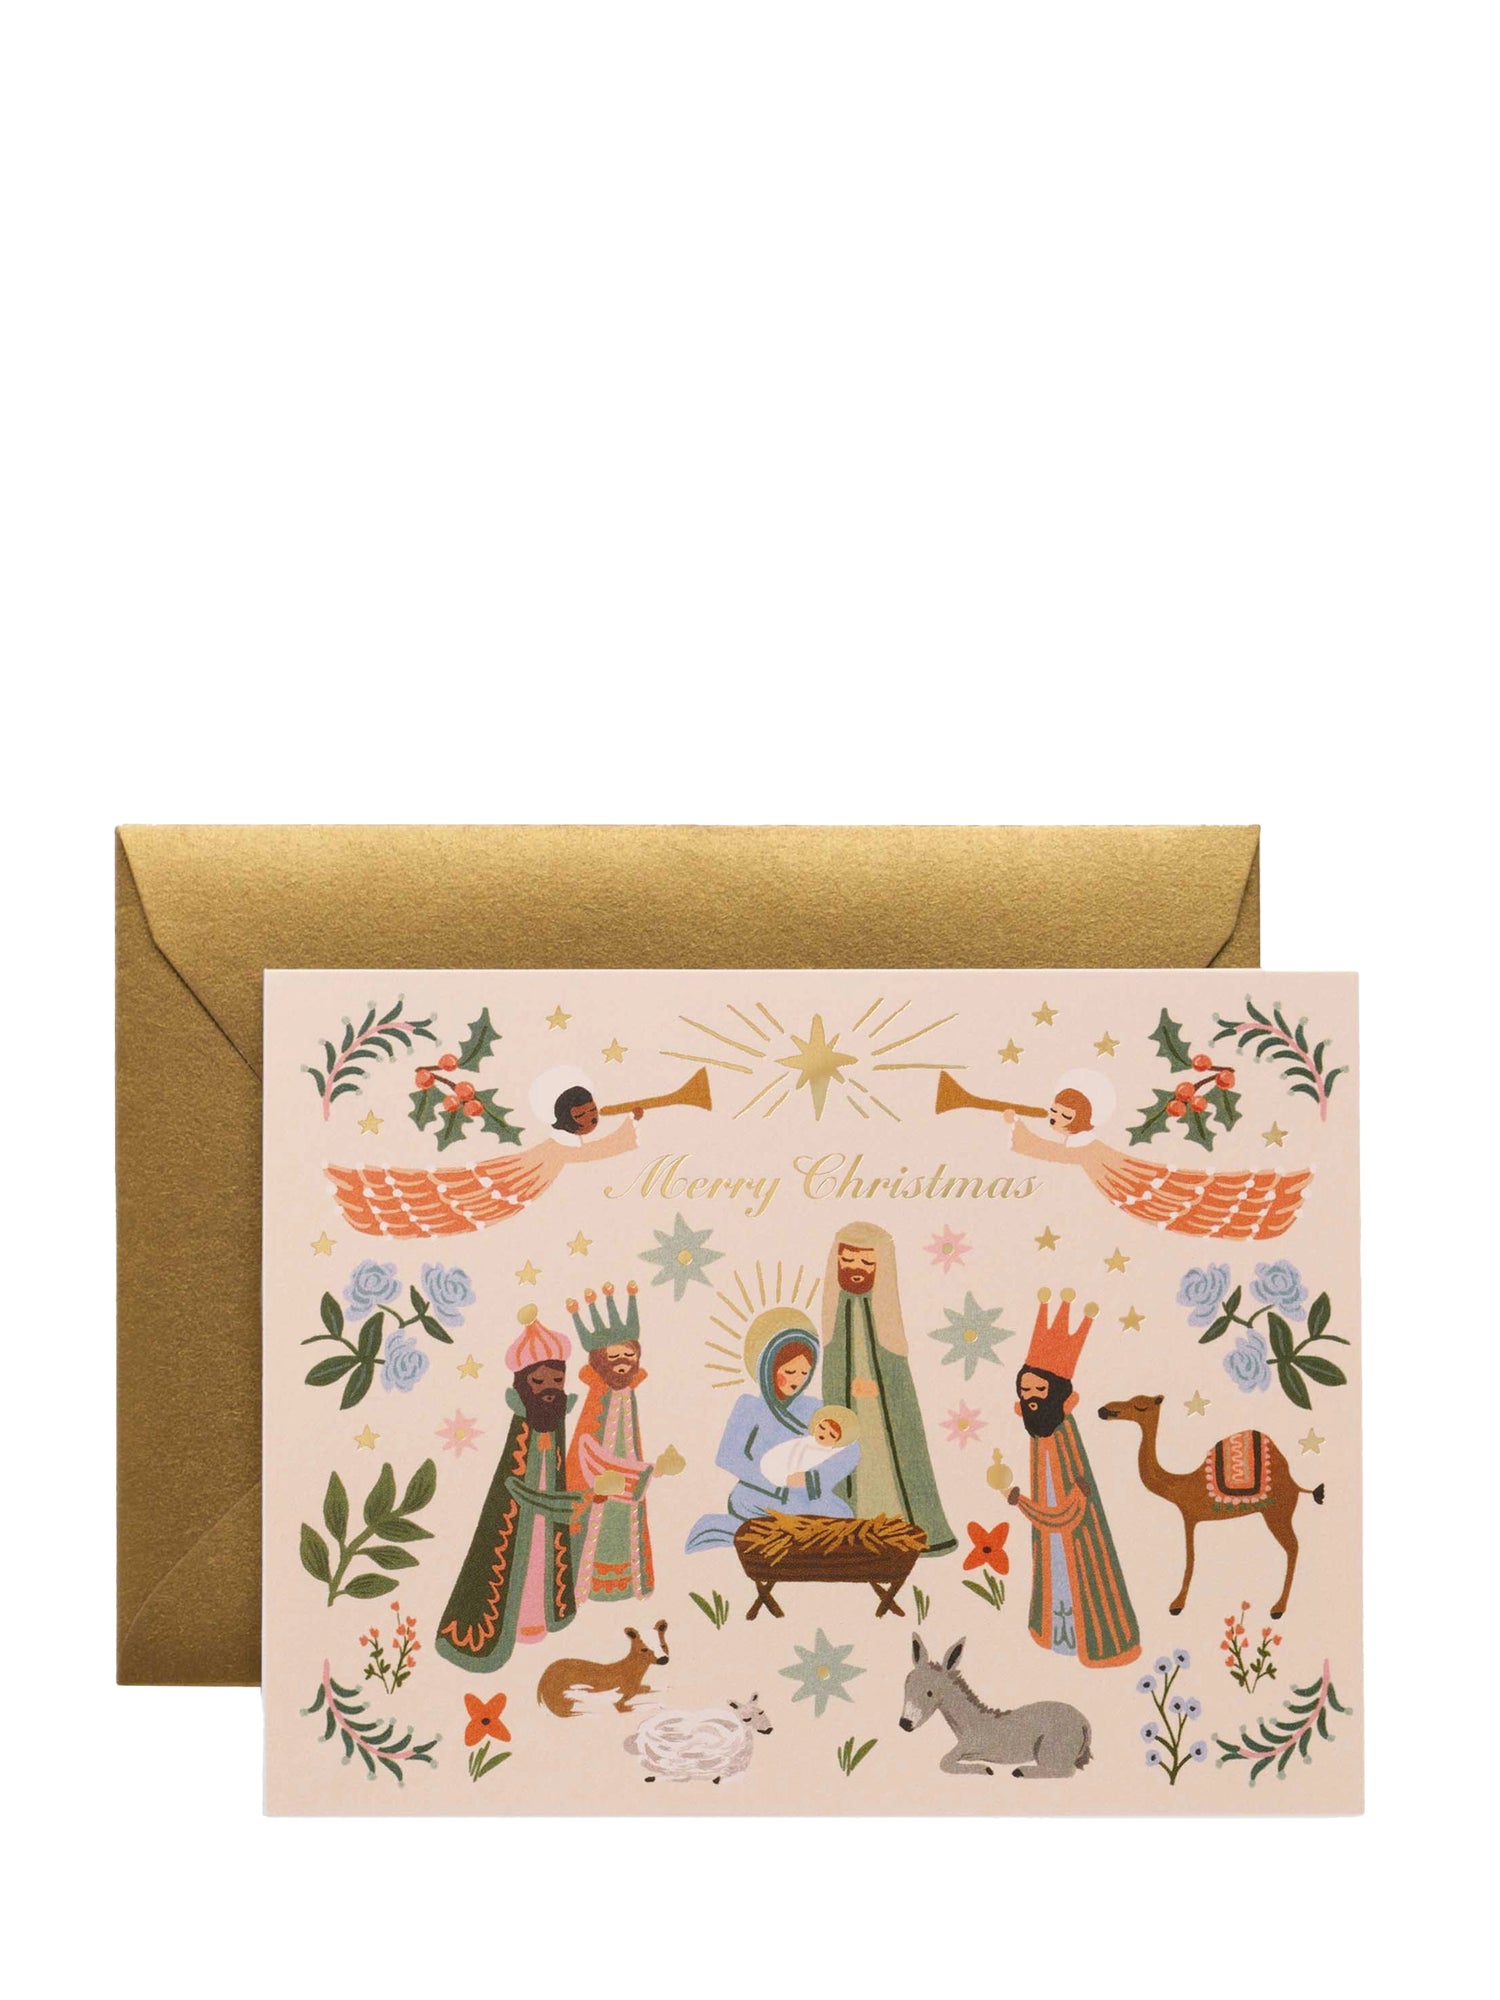 Nativity Scene Christmas card